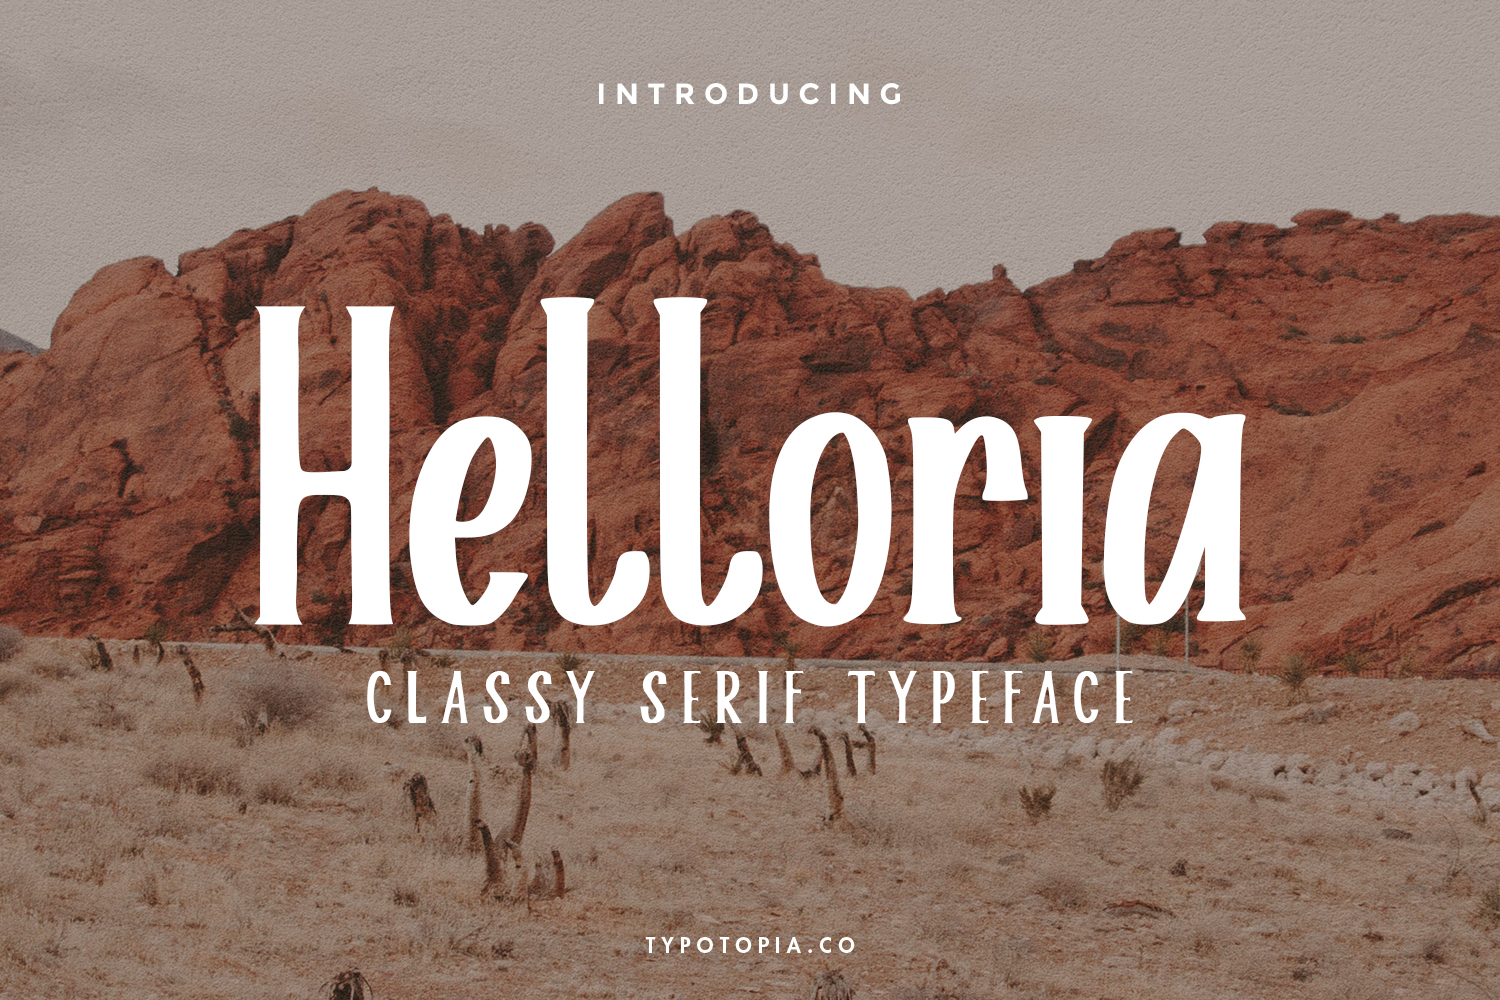 Helloria Classy Serif Typeface